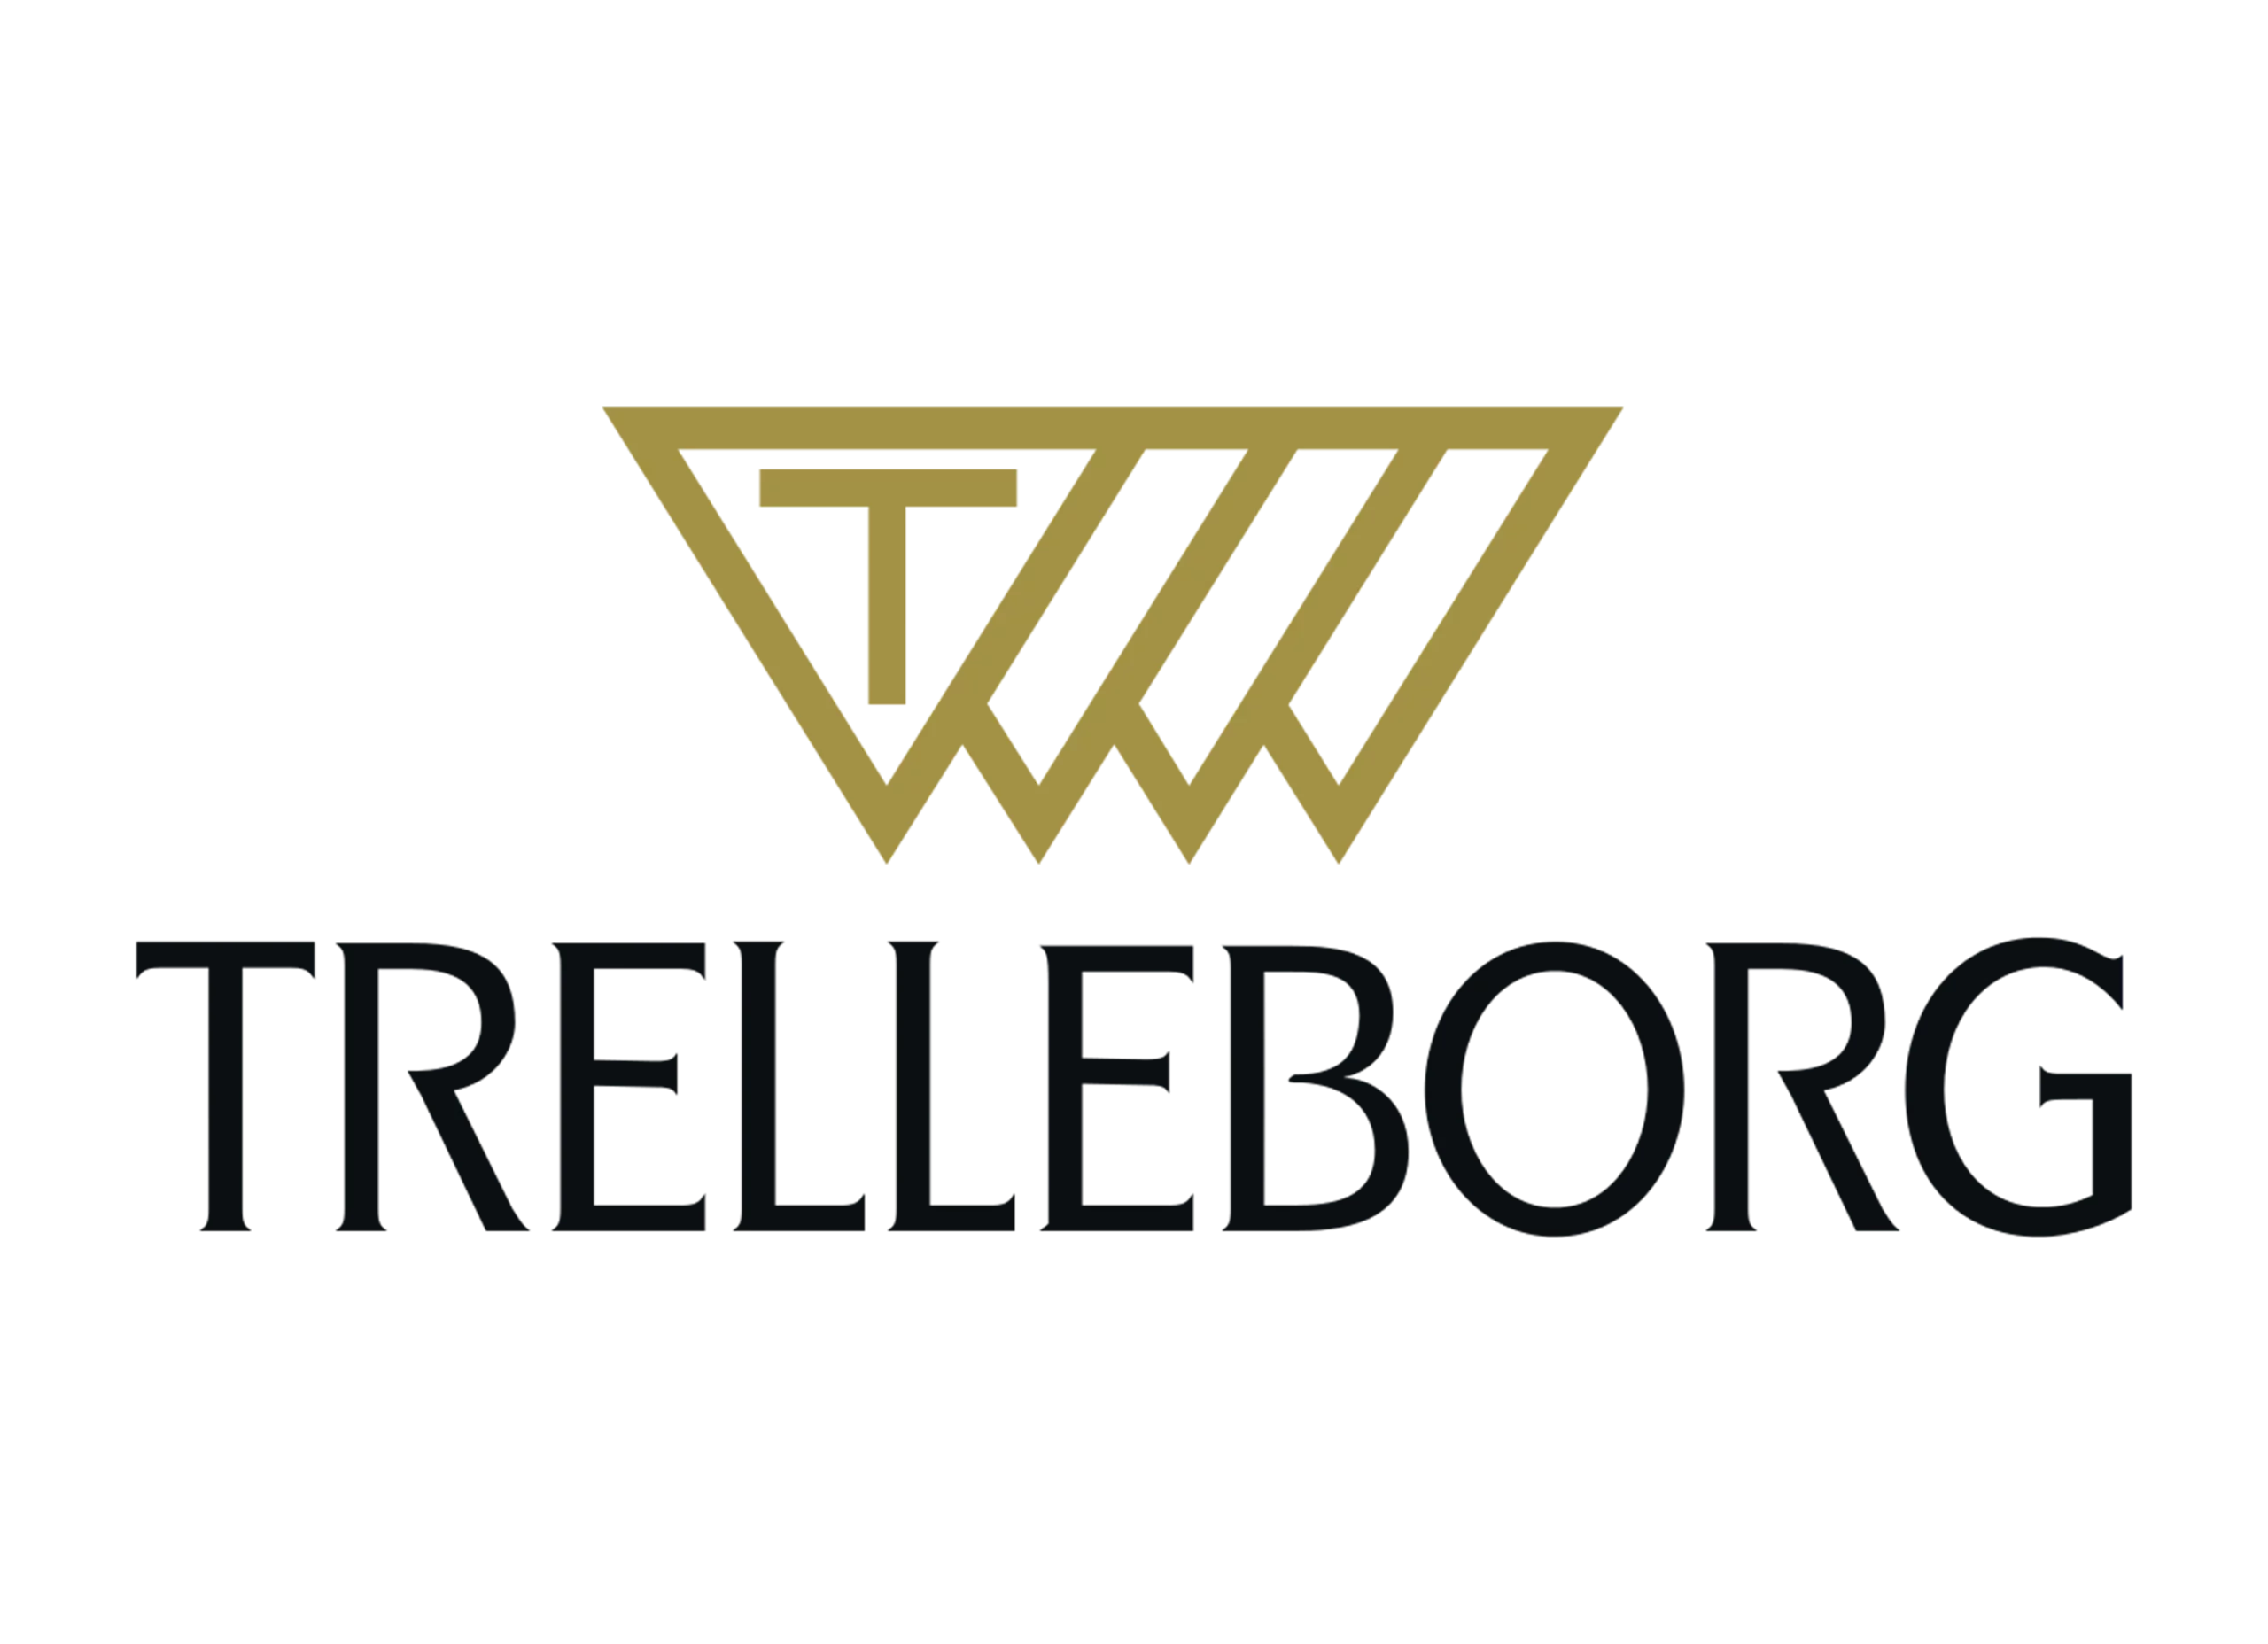 Trelleborg logo present